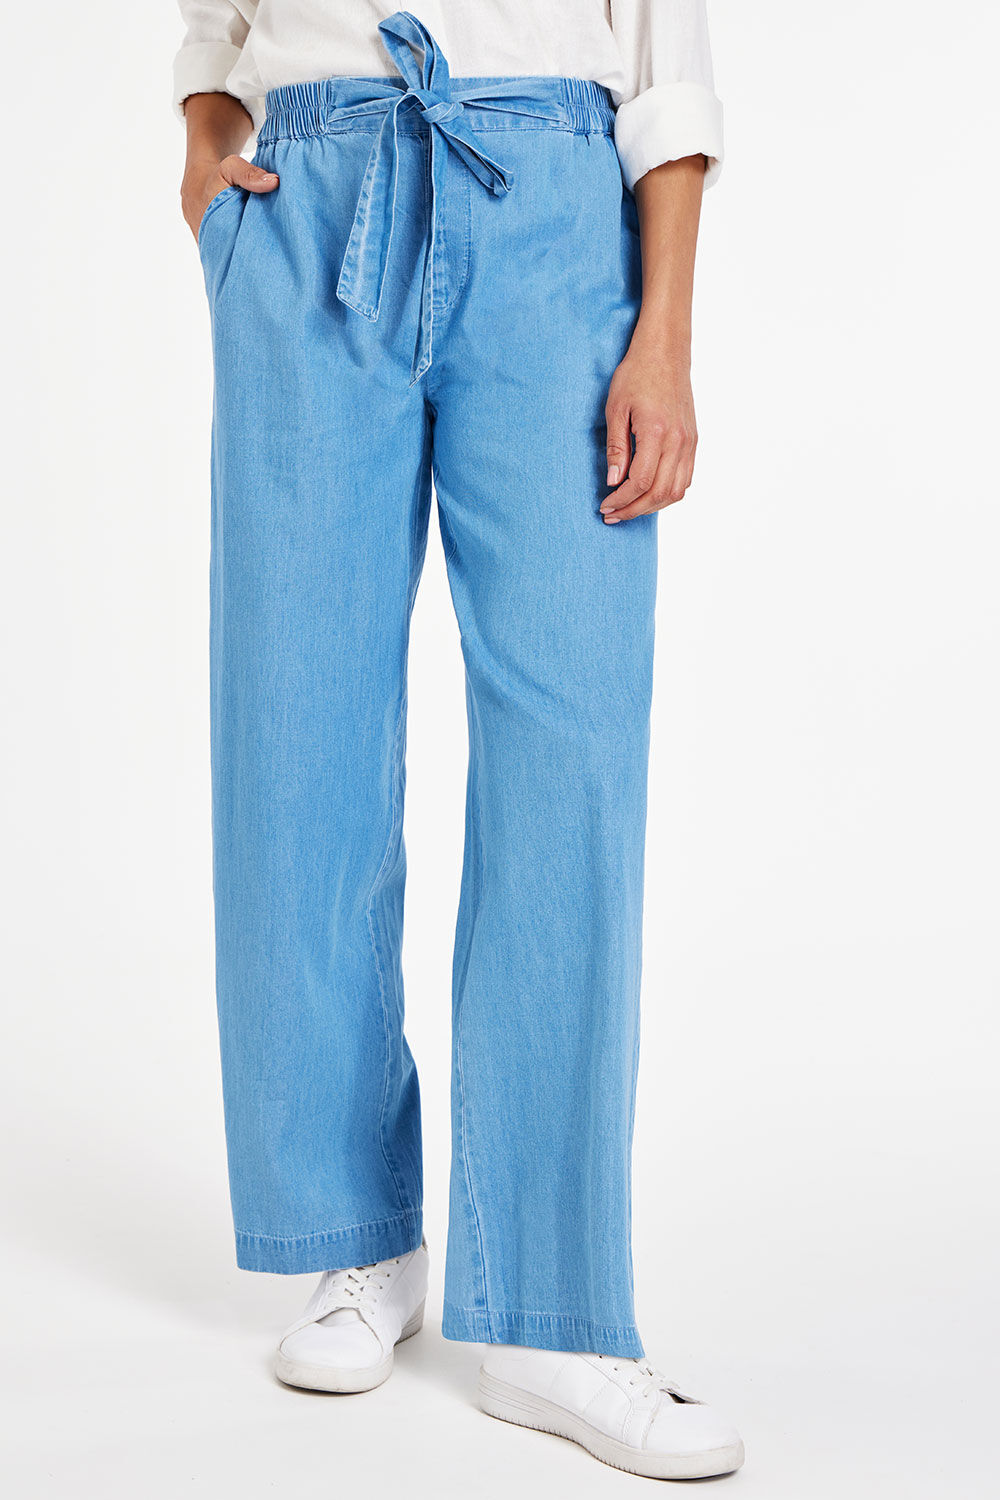 Women's Adjustable Drawstring Elastic Waist Baggy Cargo Pants Multi-Pocket  Jogging Trousers Streetwear - Walmart.com